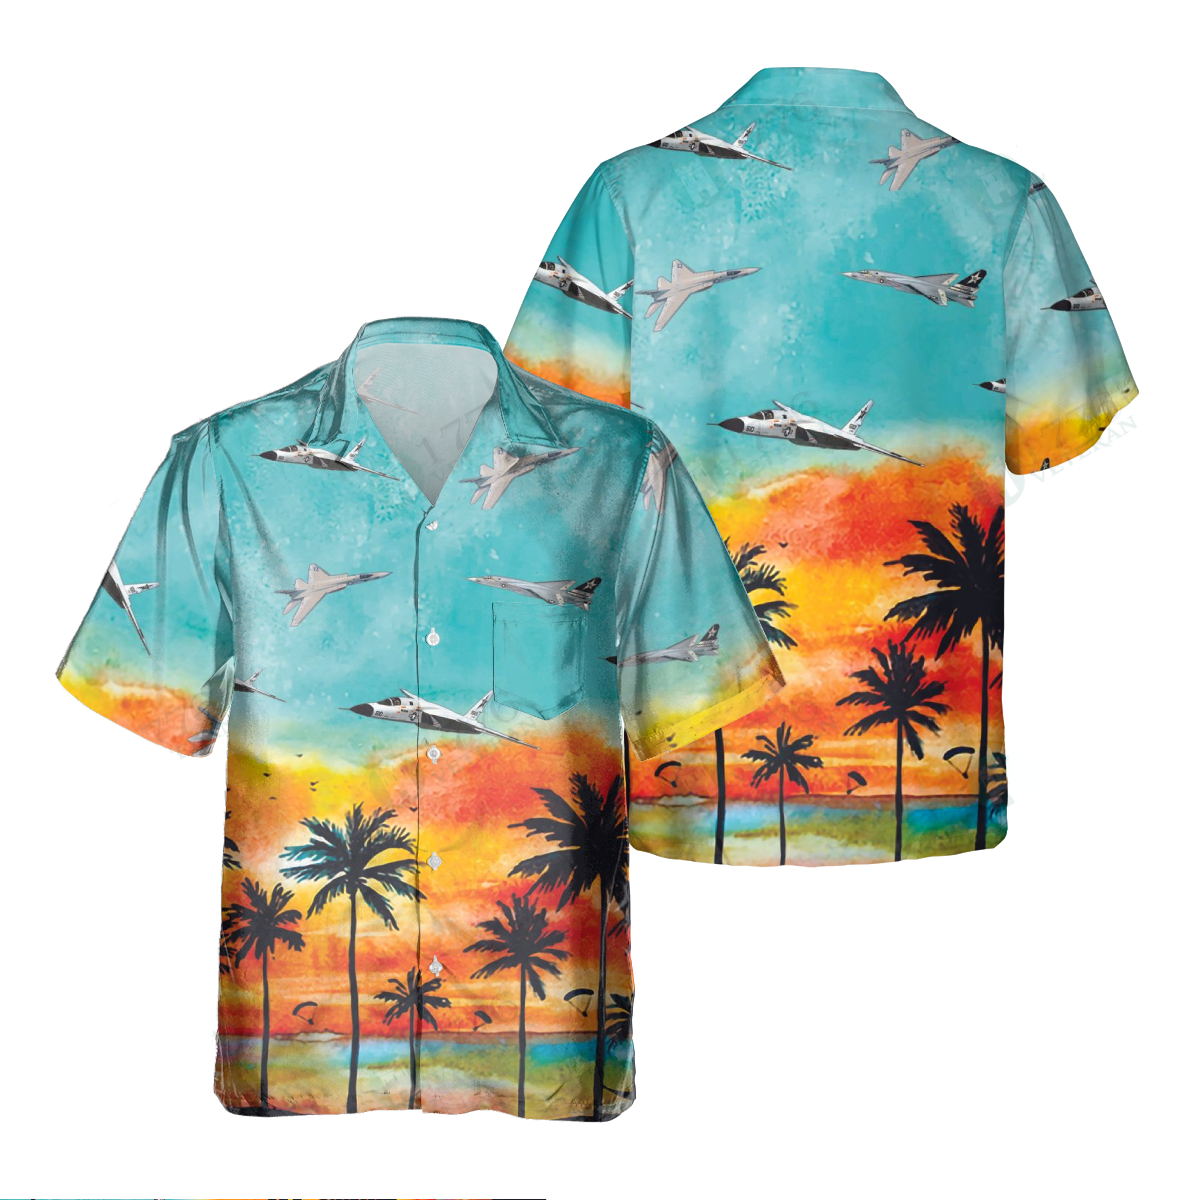 A-5 Vigilante Pocket Hawaiian Shirt / Hawaiian Shirt for Men Dad Veteran/ Patriot Day